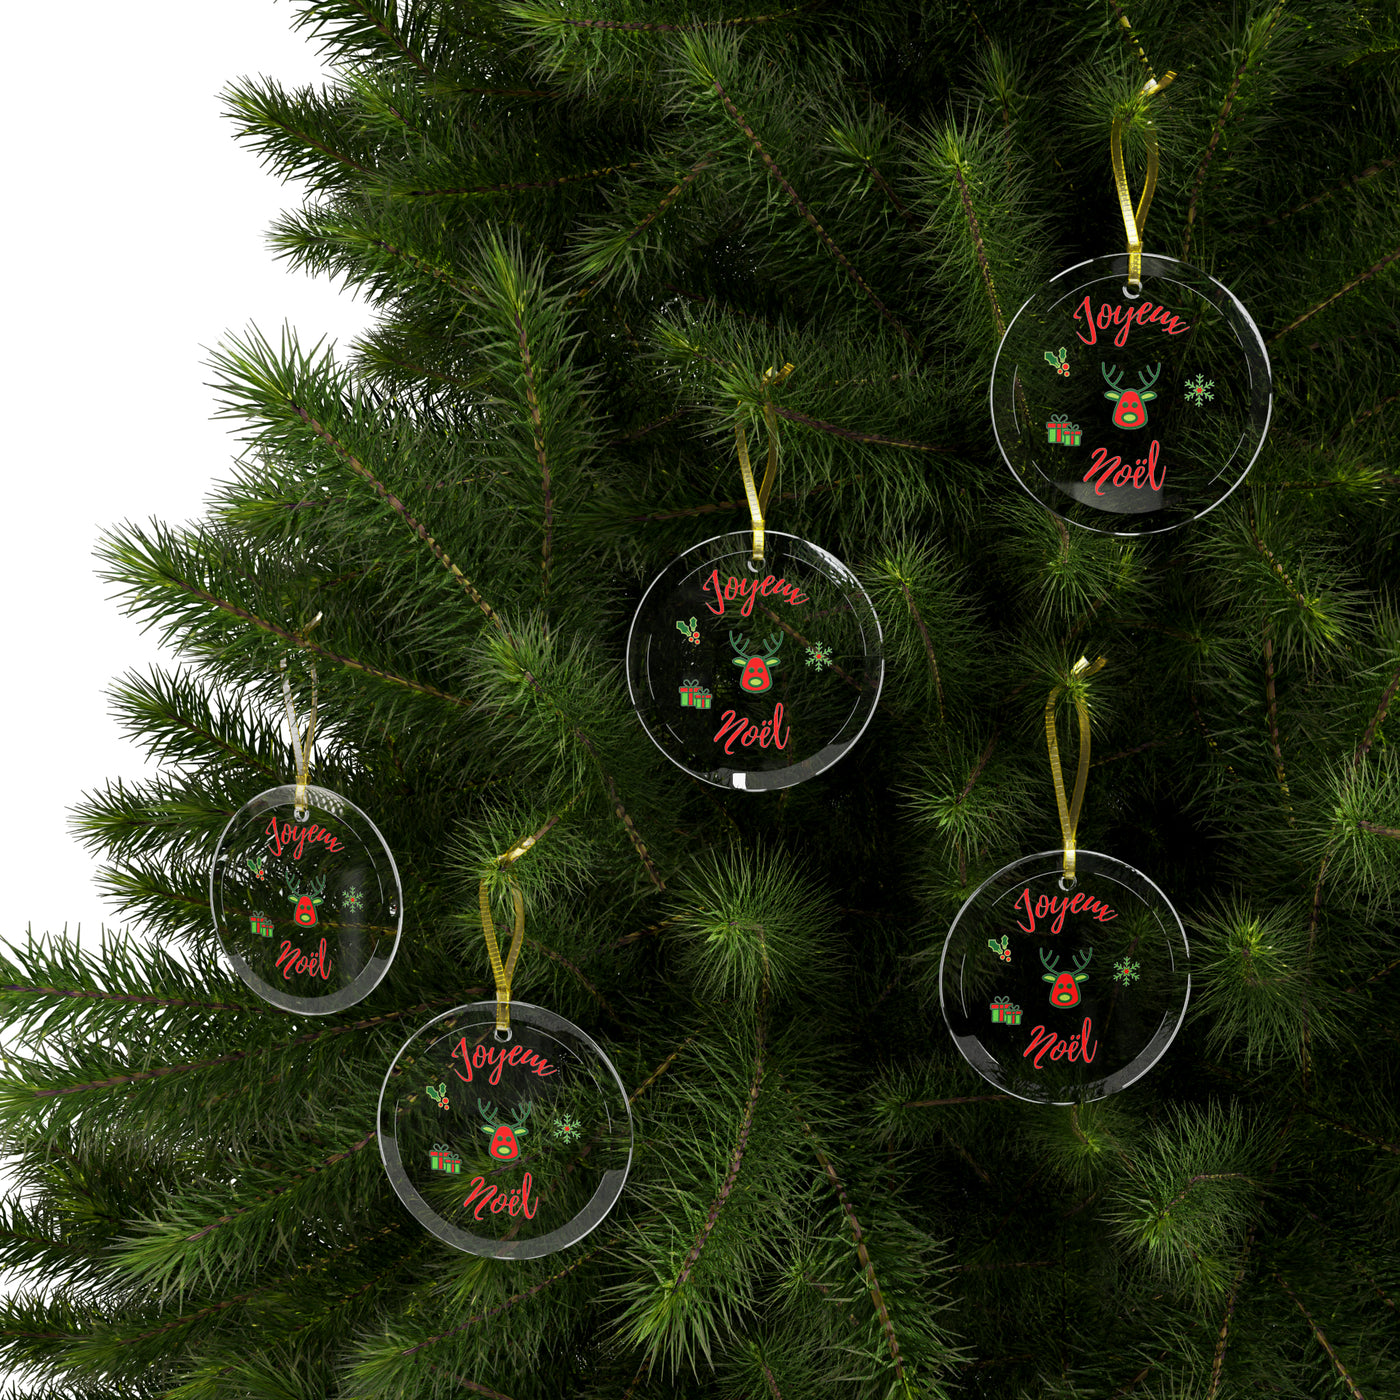 Joyeux Noel Red reindeer - French Christmas Glass Ornament Bundles FROM 15.99/u